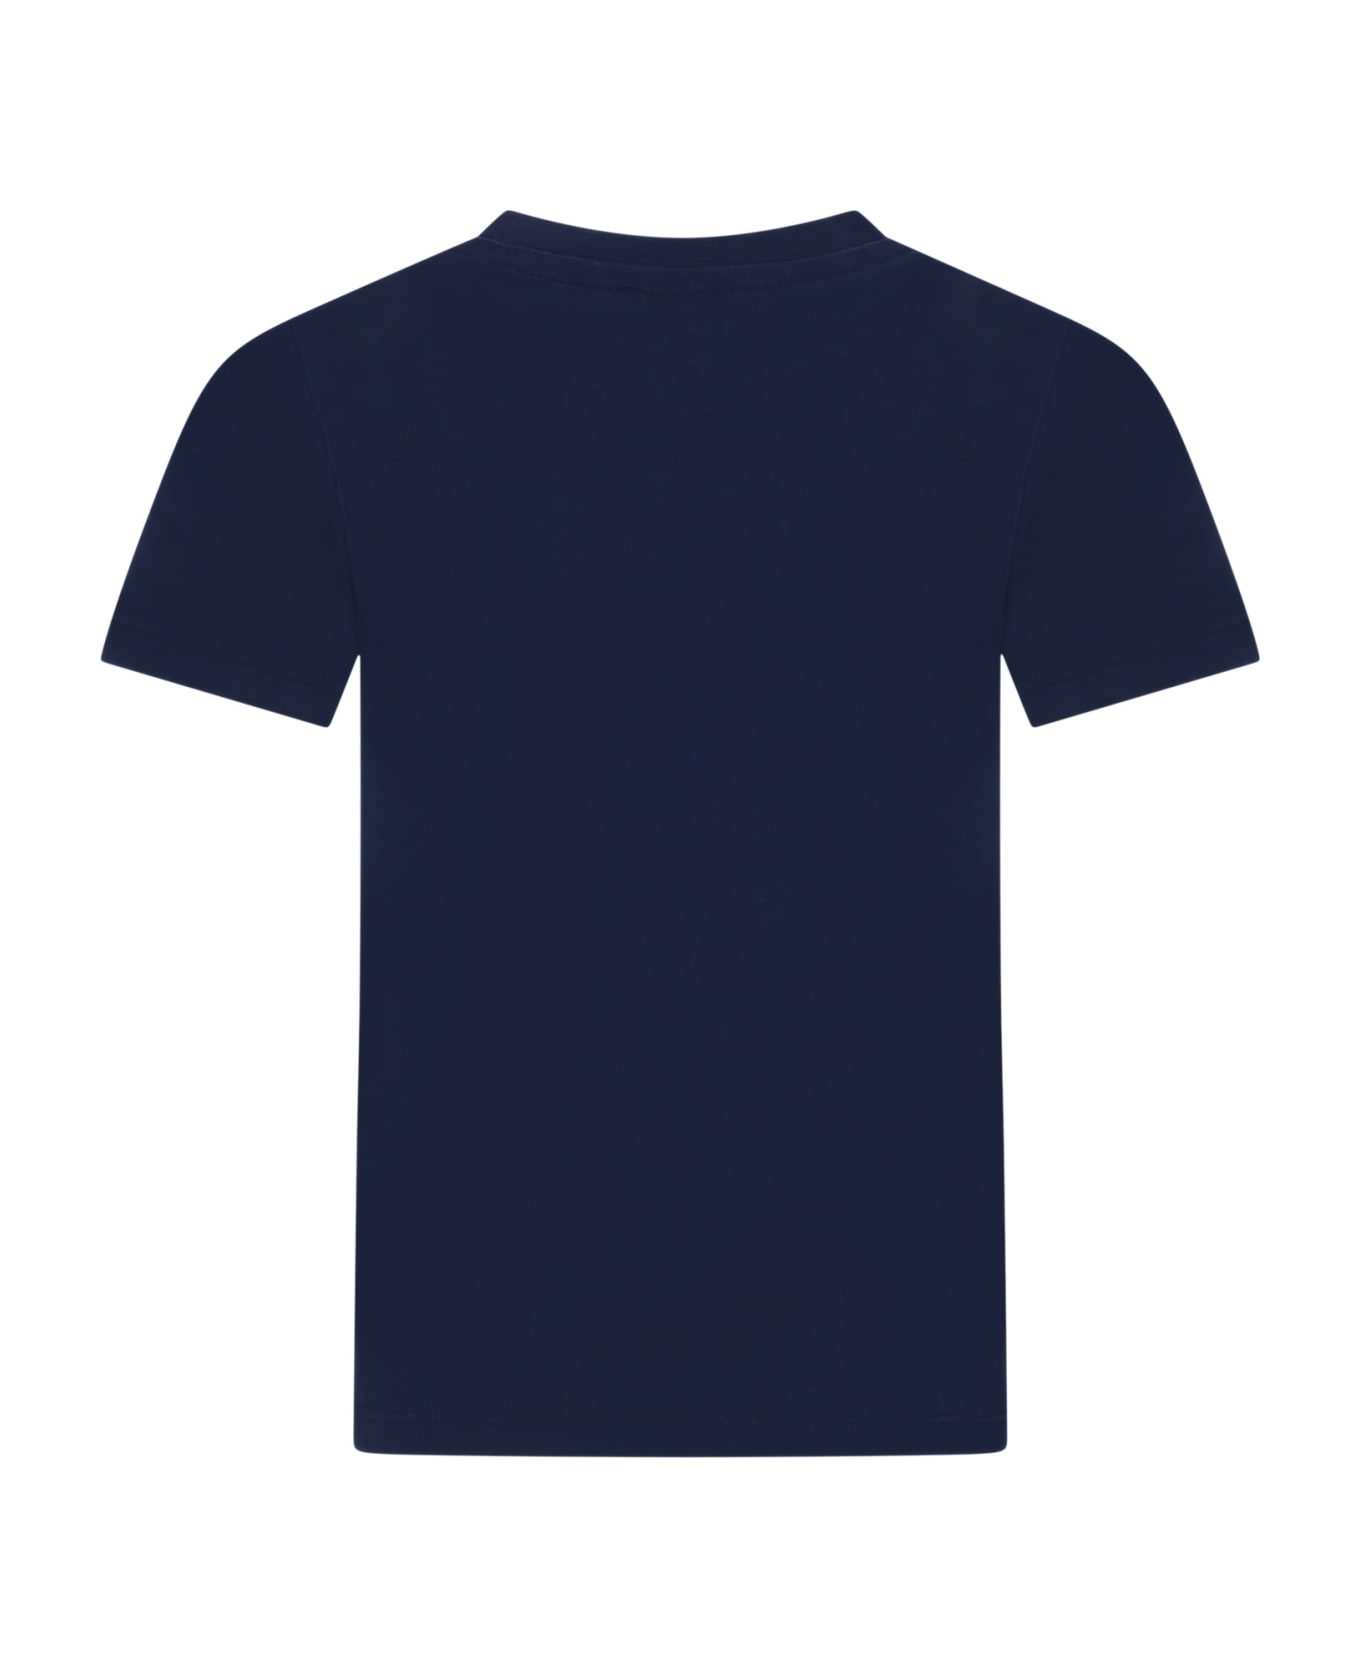 Kenzo Kids Blue T-shirt For Boy With Logo - A Marine